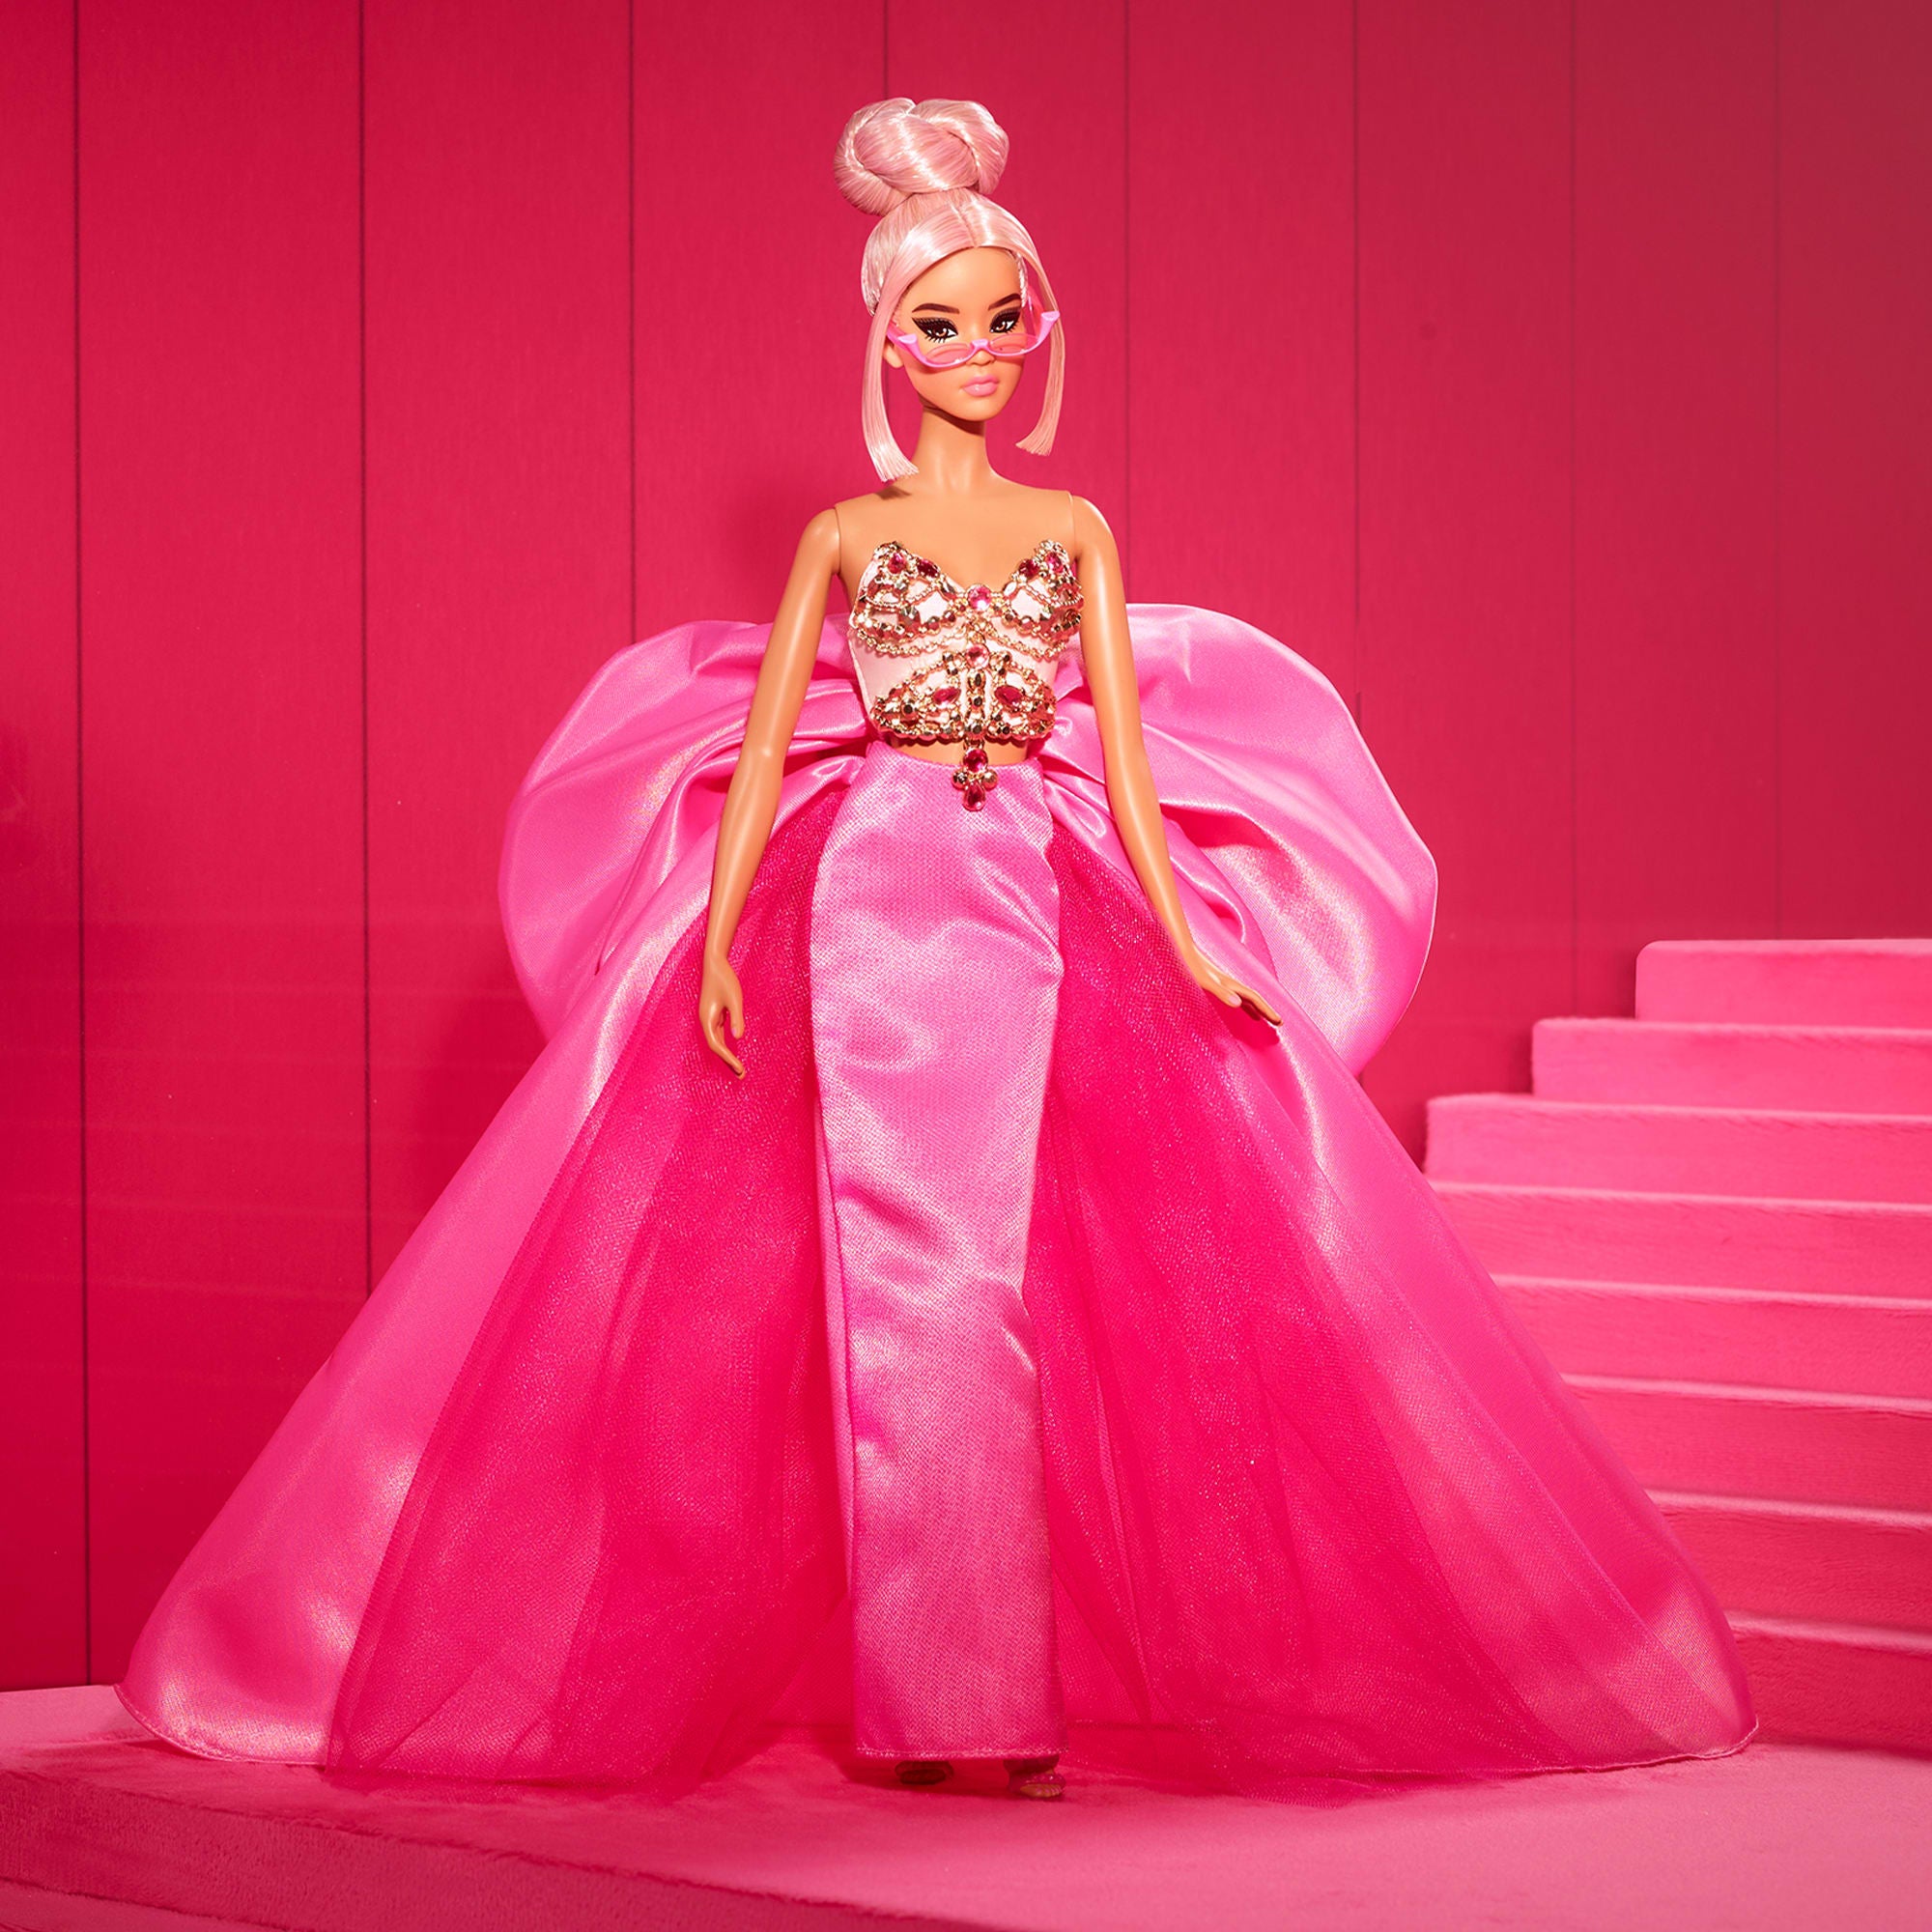 Barbie Signature Collector Dolls & Merch | Mattel Creations